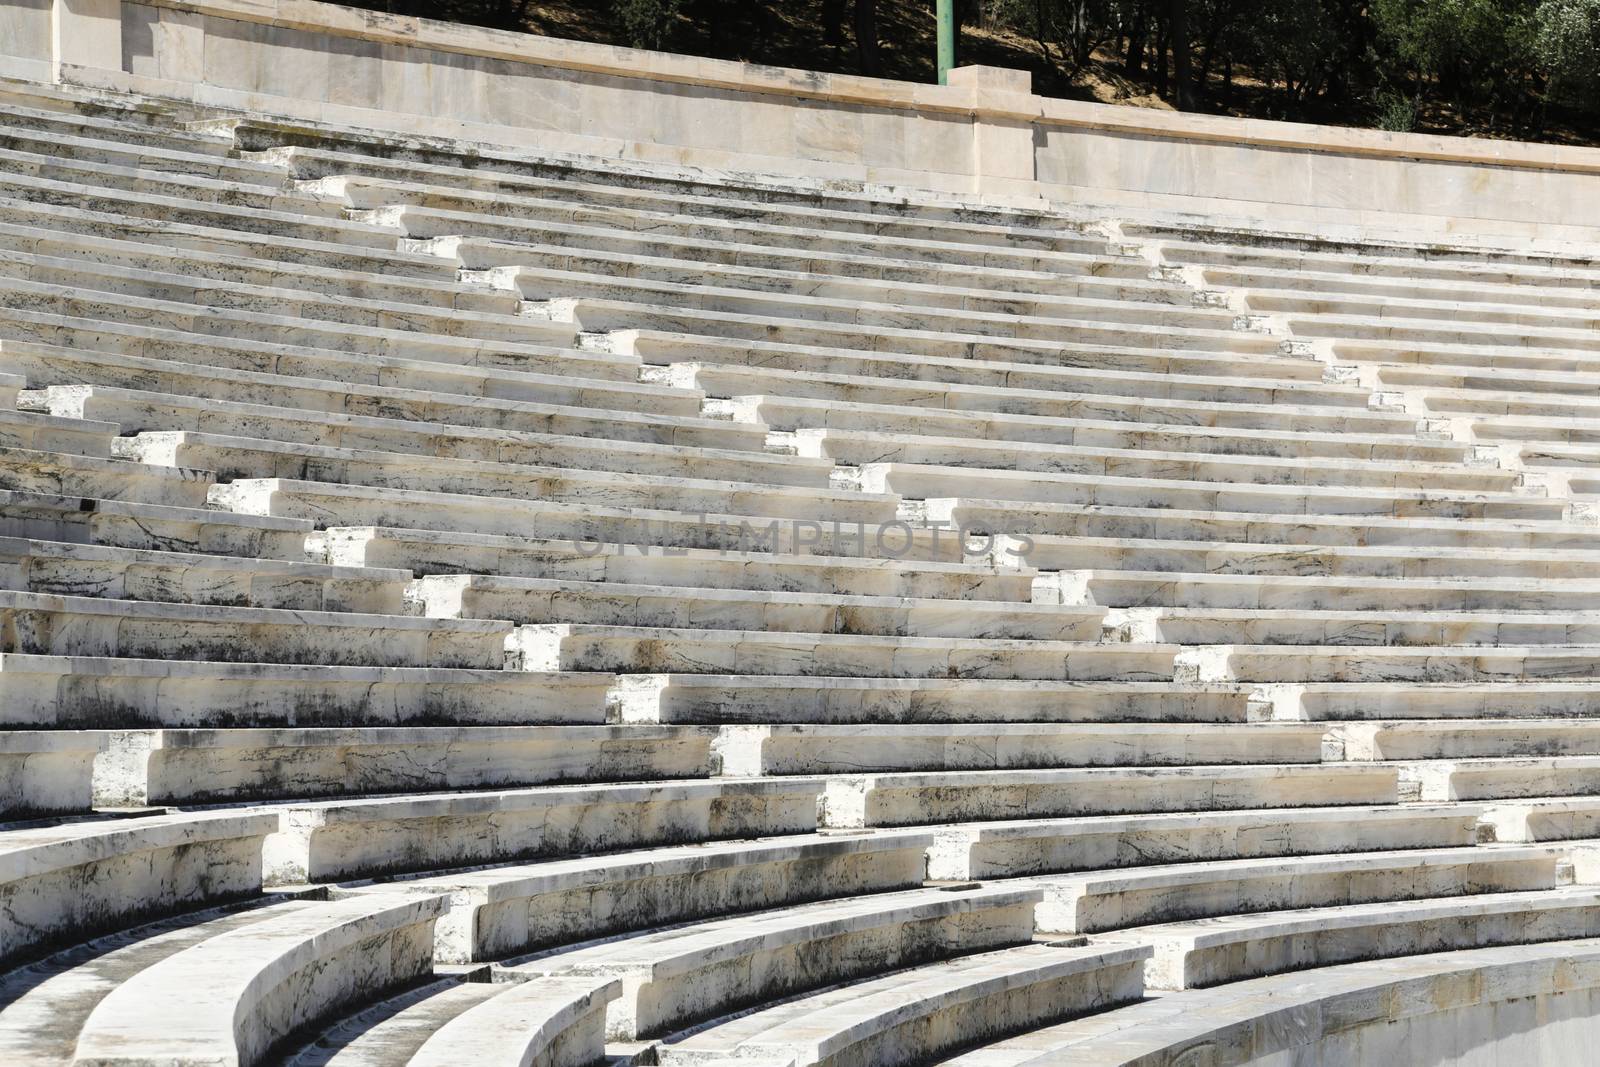 The Panathenaic stadium by Kartouchken